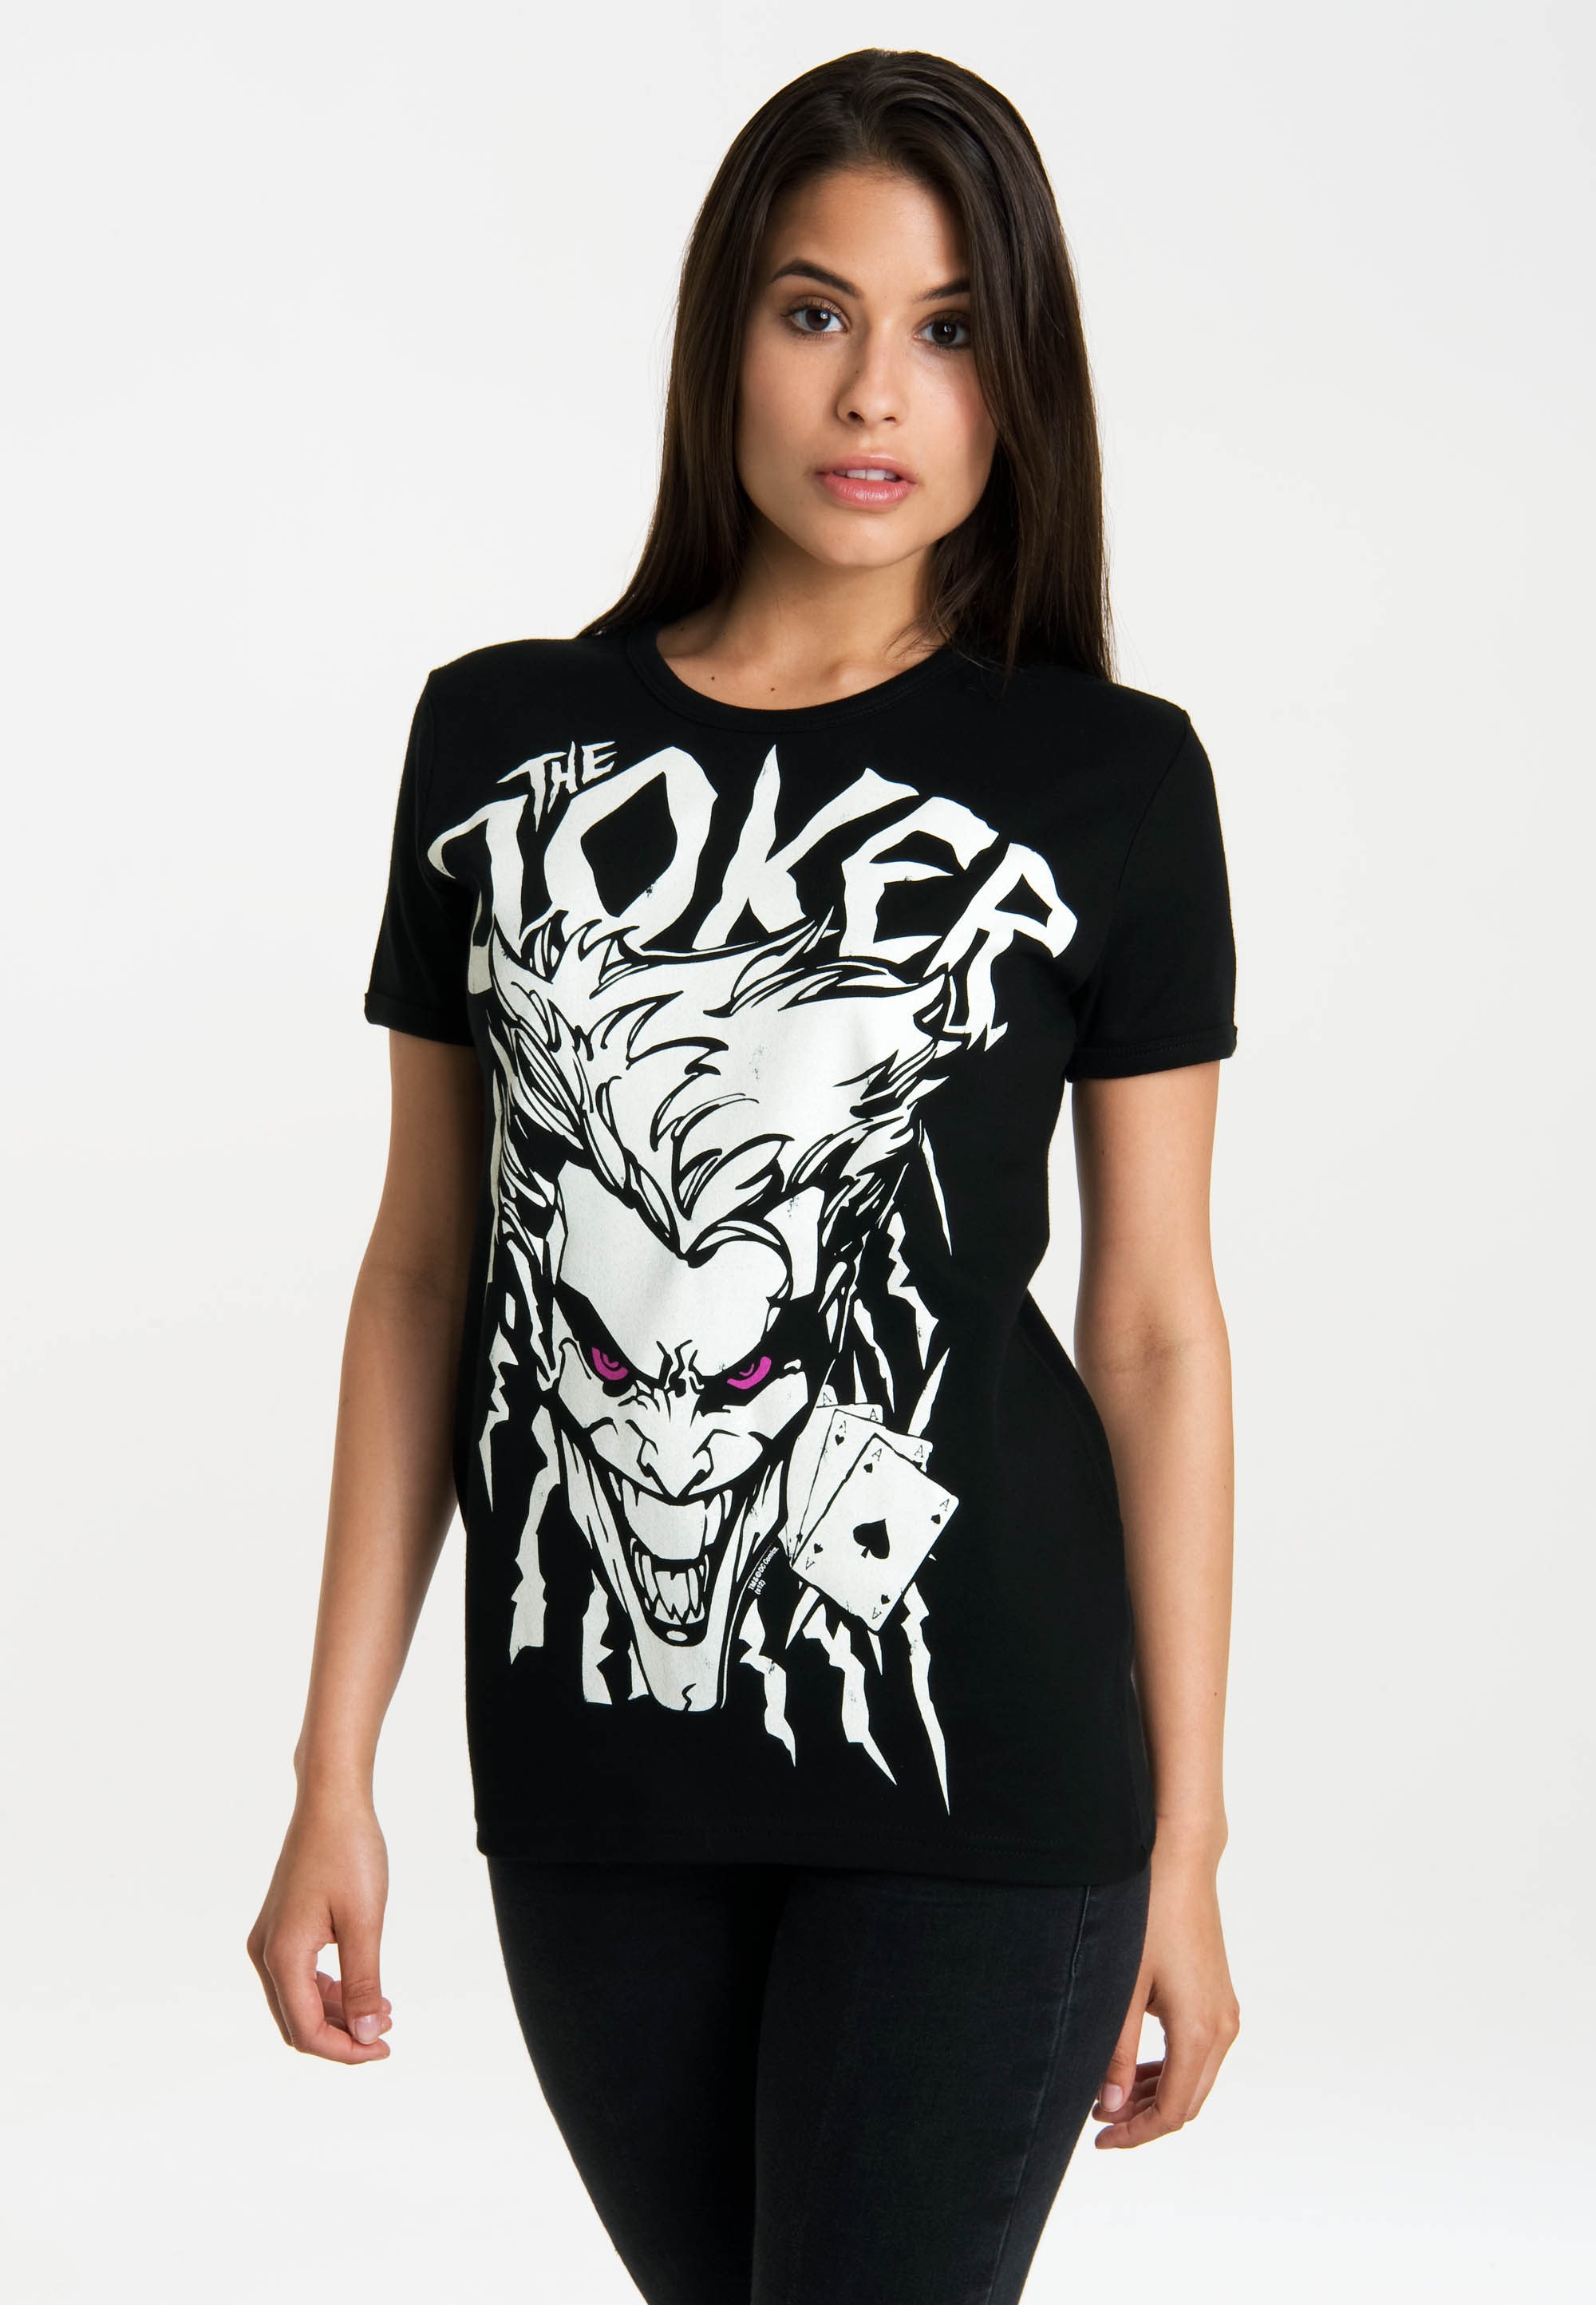 T-Shirt »The Joker«, mit lizenziertem Originaldesign